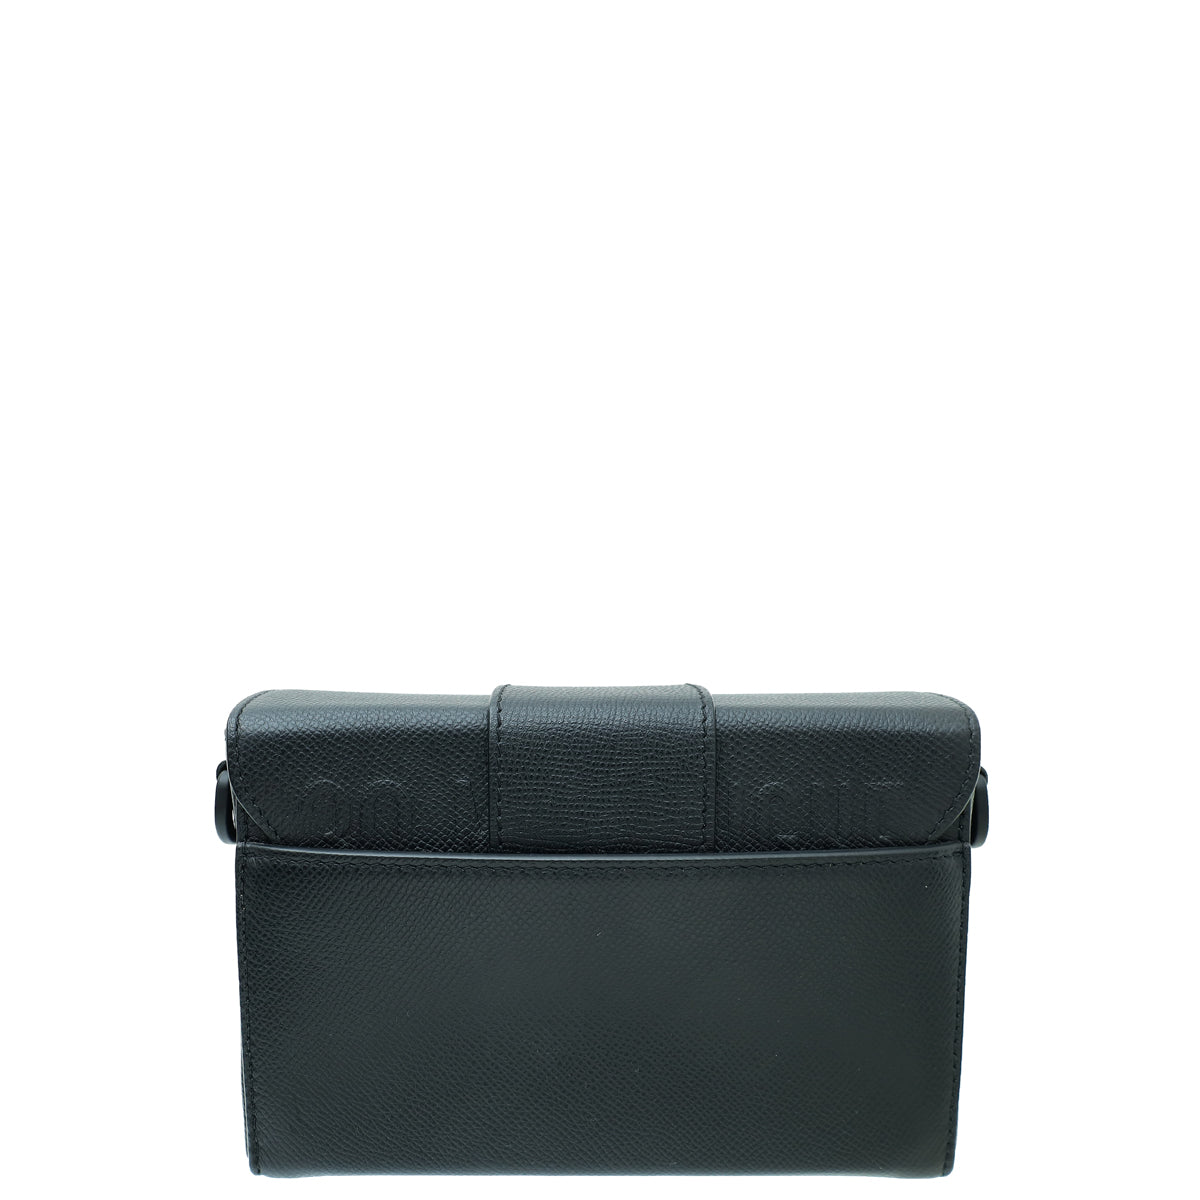 Christian Dior Black 30 Montaigne Box Bag